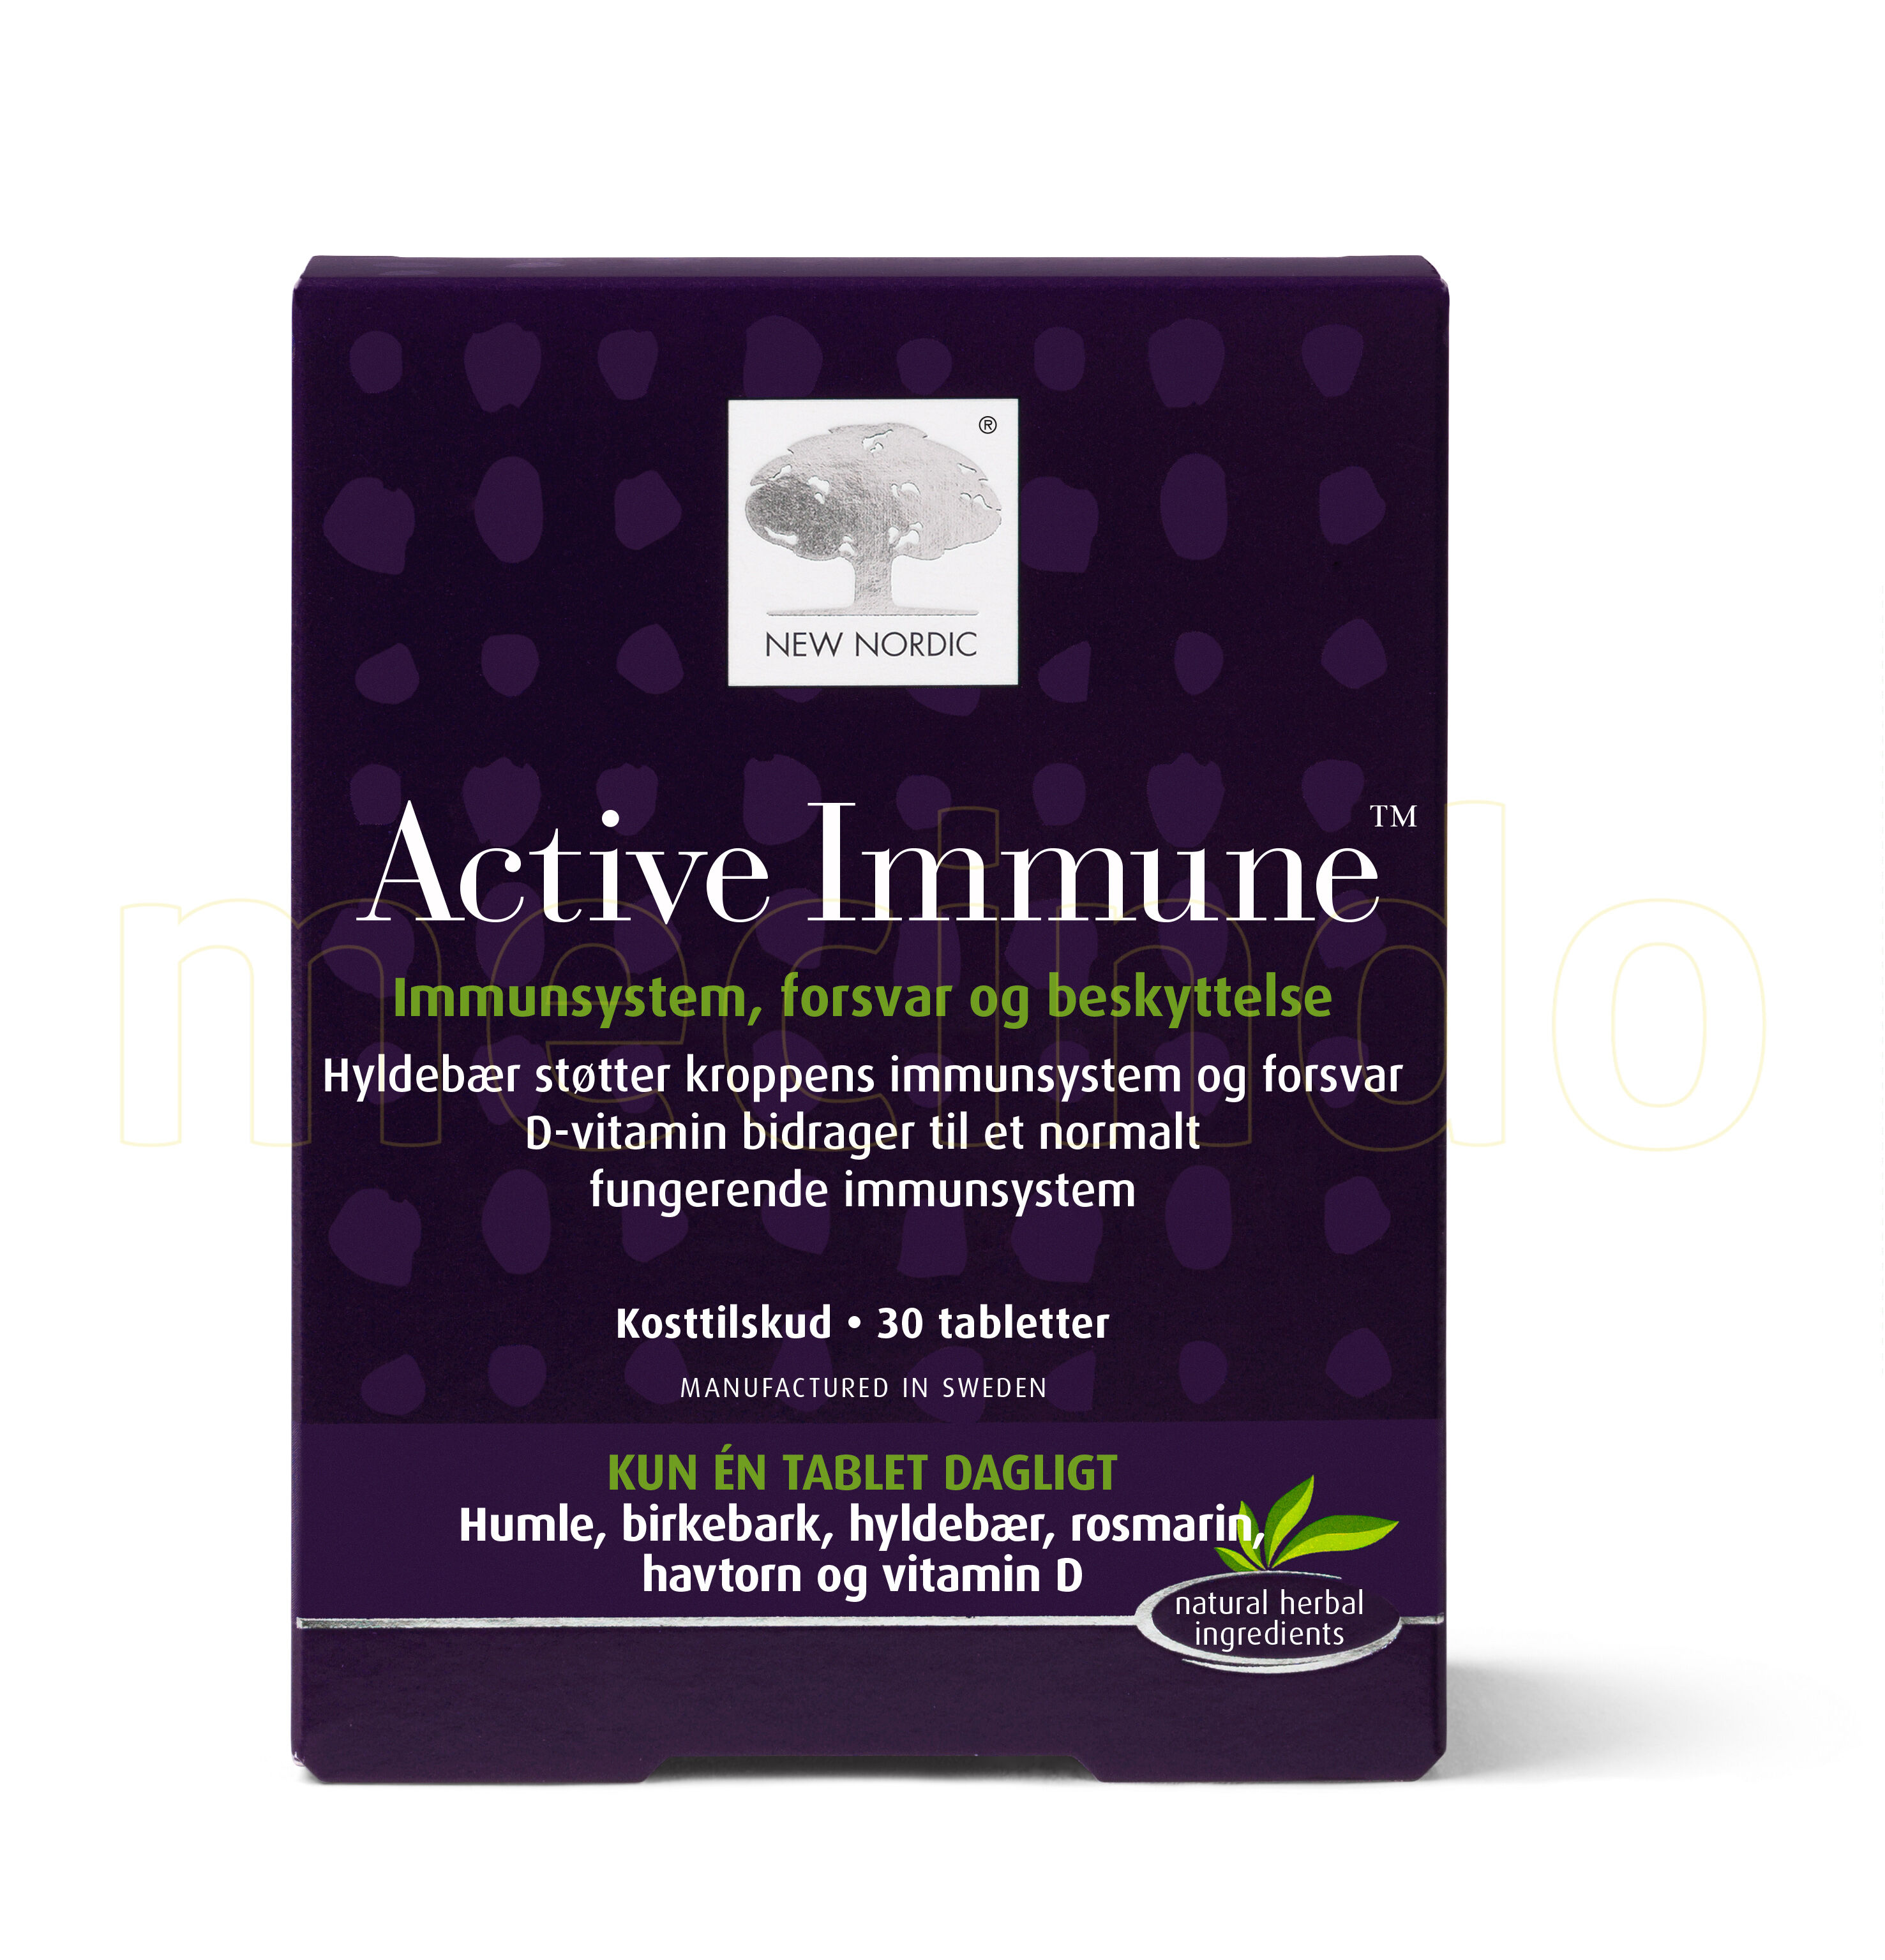 New Nordic Active Immune - 30 Tablett